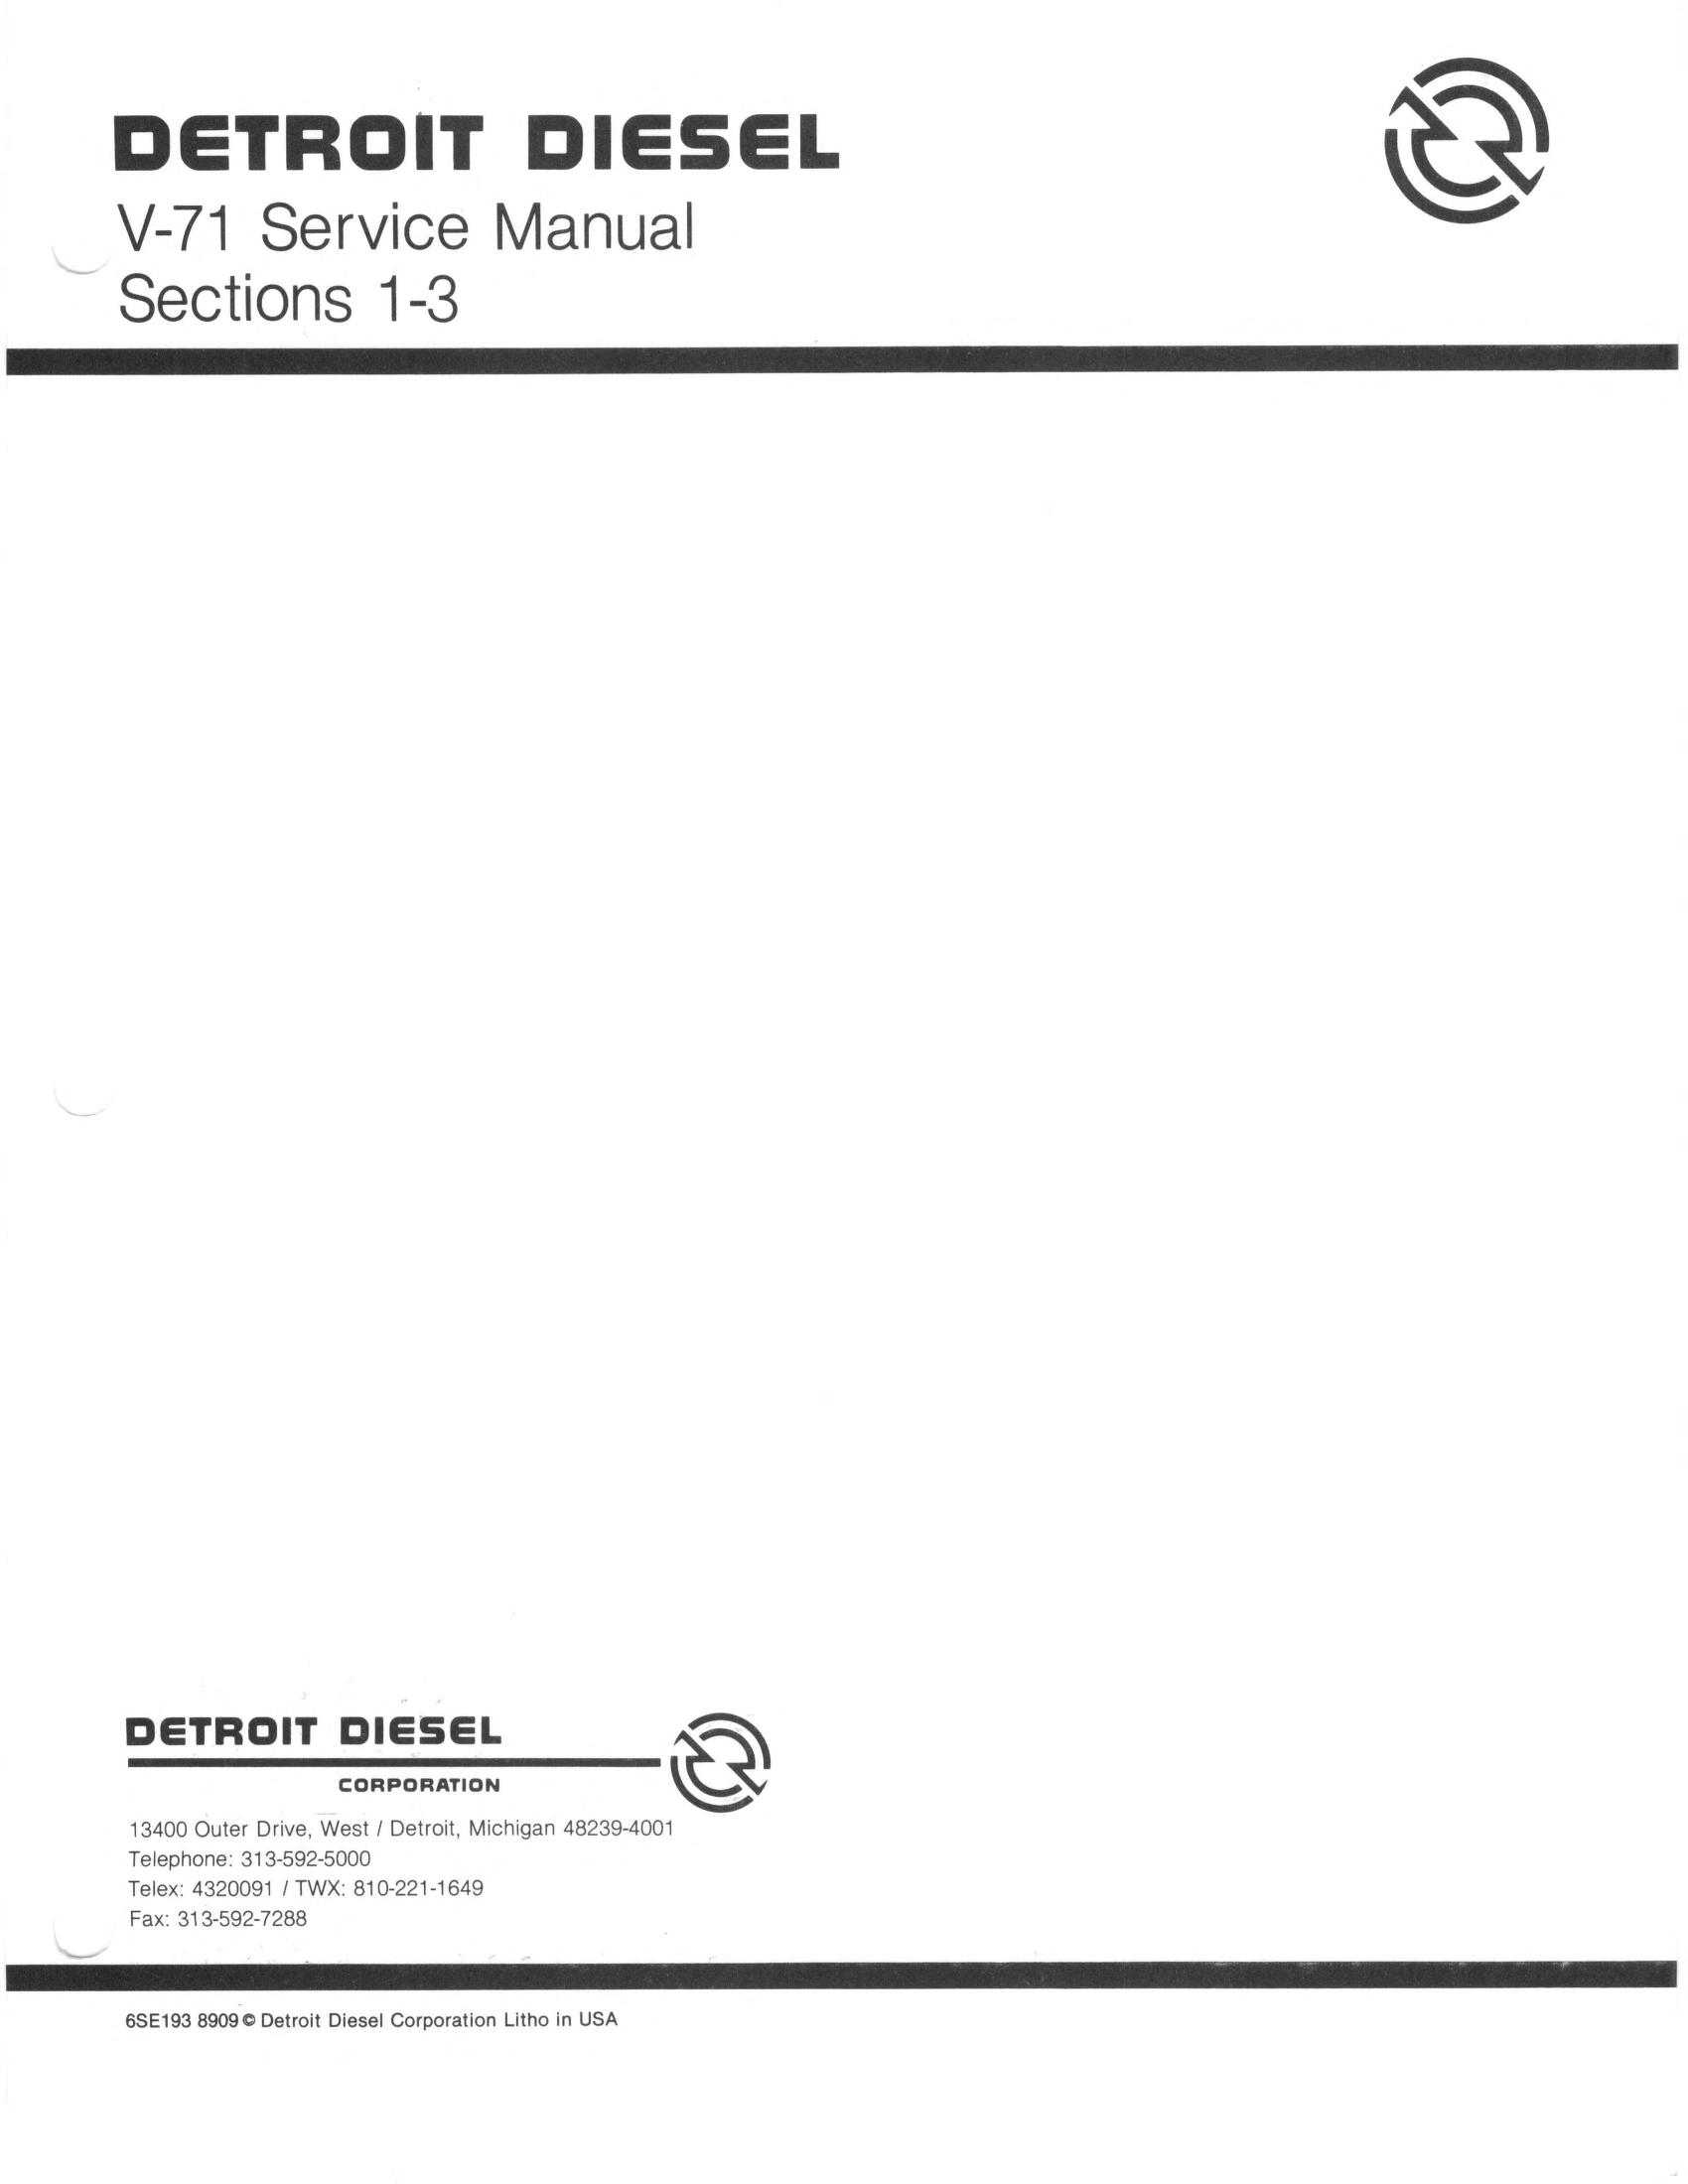 detroit diesel 71 series service manual pdf free download